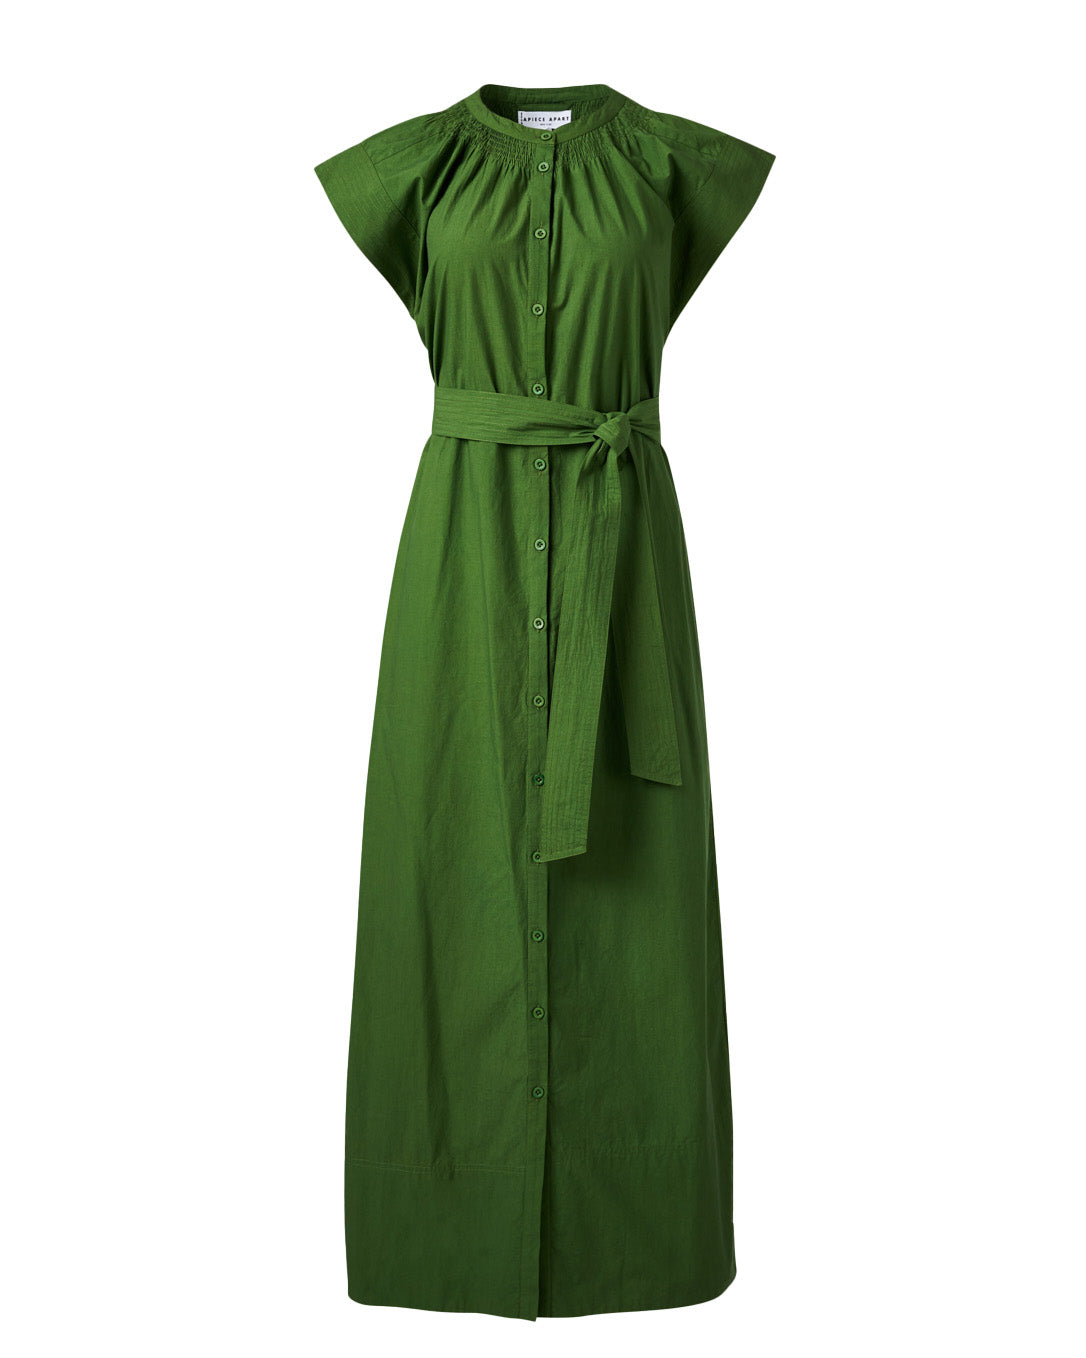 Mirada Shirtwaist Dress (Jardin)